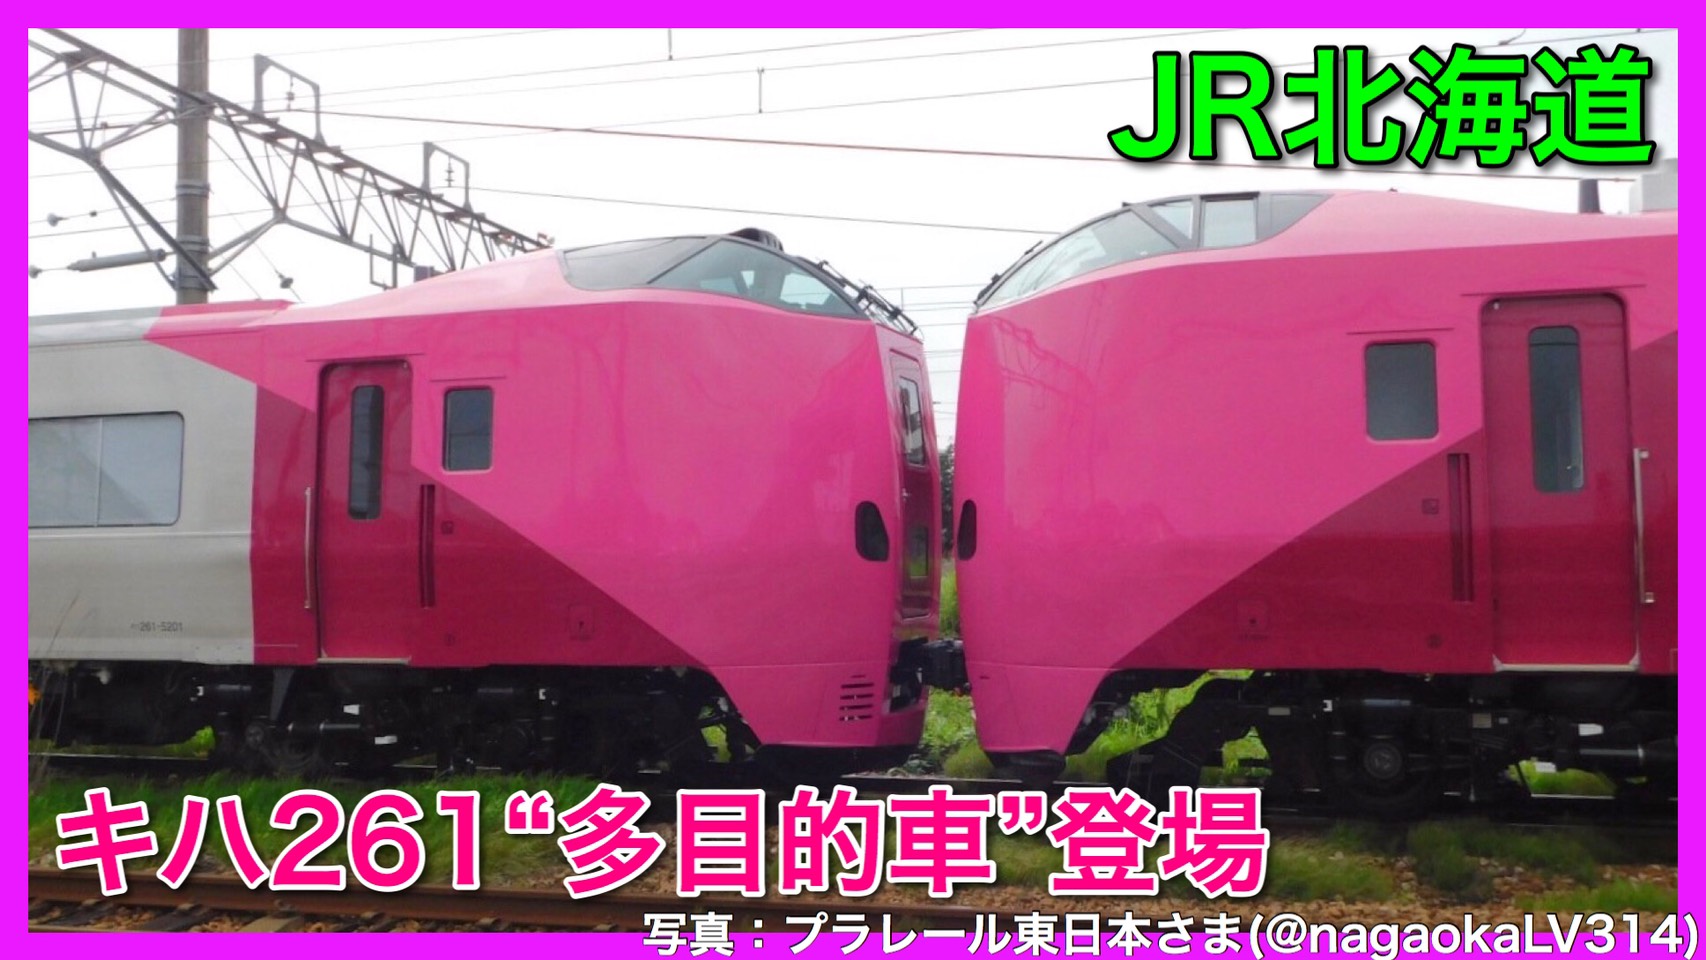 Jr北海道 キハ261系5000番台 多目的車両 はまなす色が落成 鉄道ファンの待合室